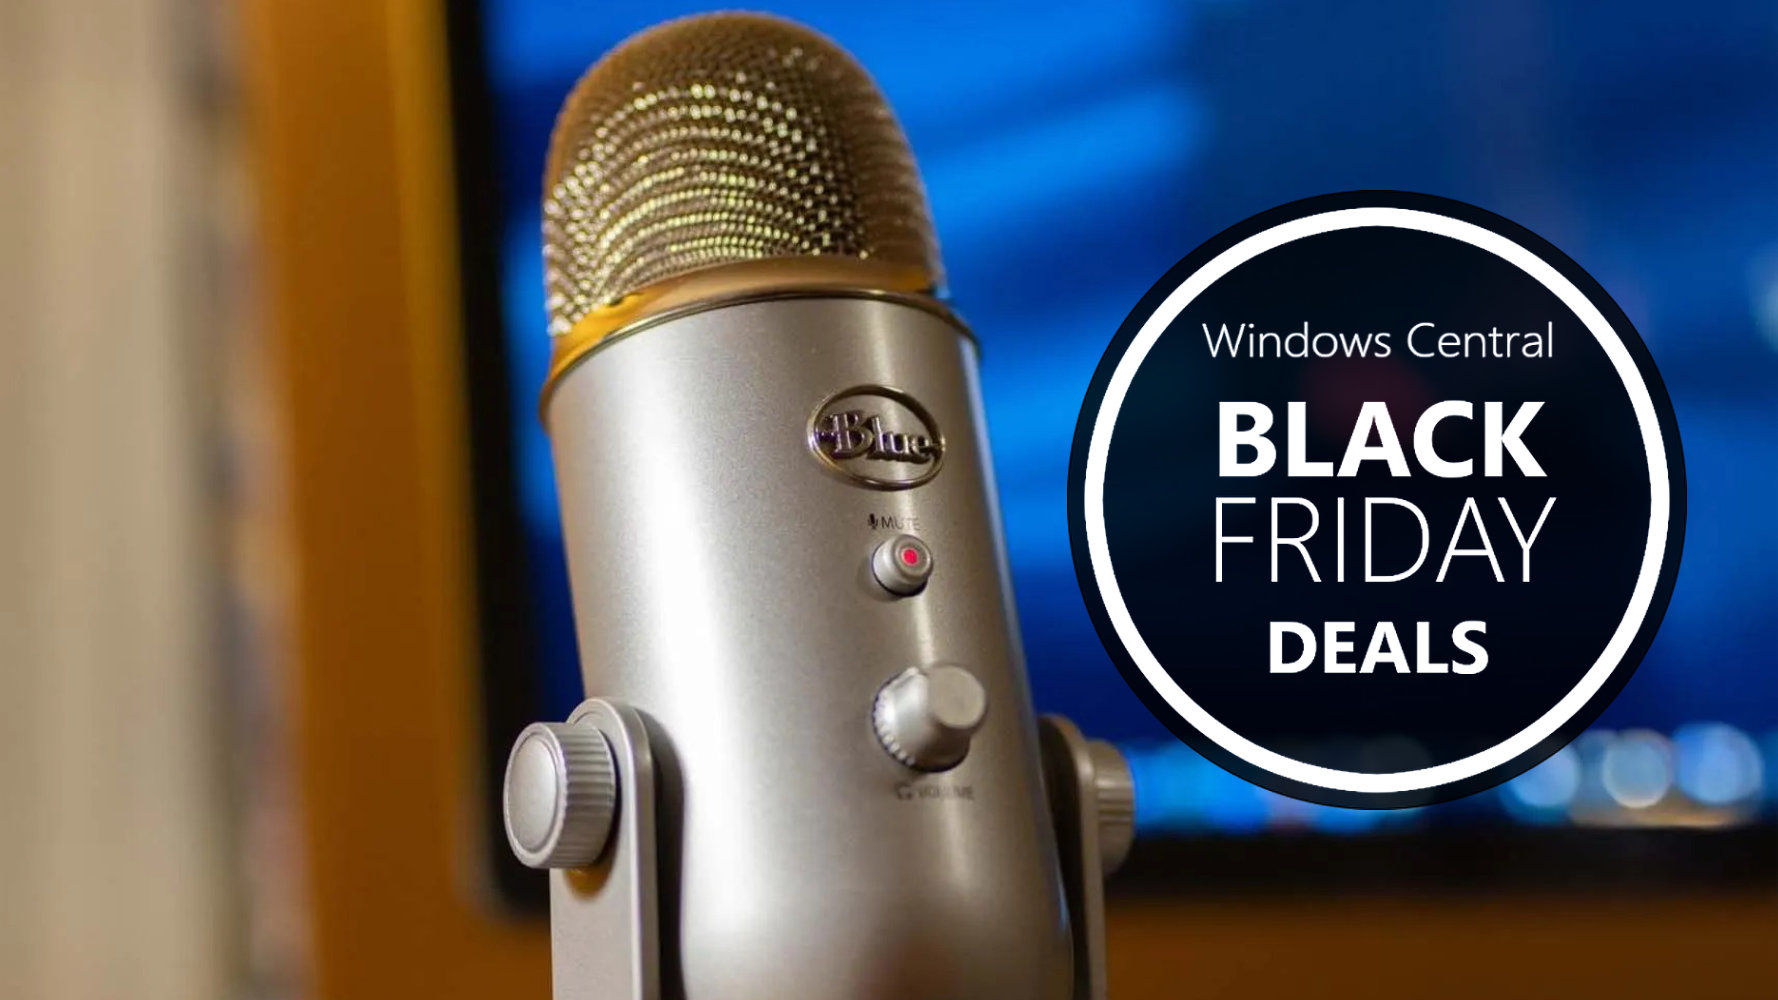 Save $50 on Blue Yeti X USB mics during 's early Black